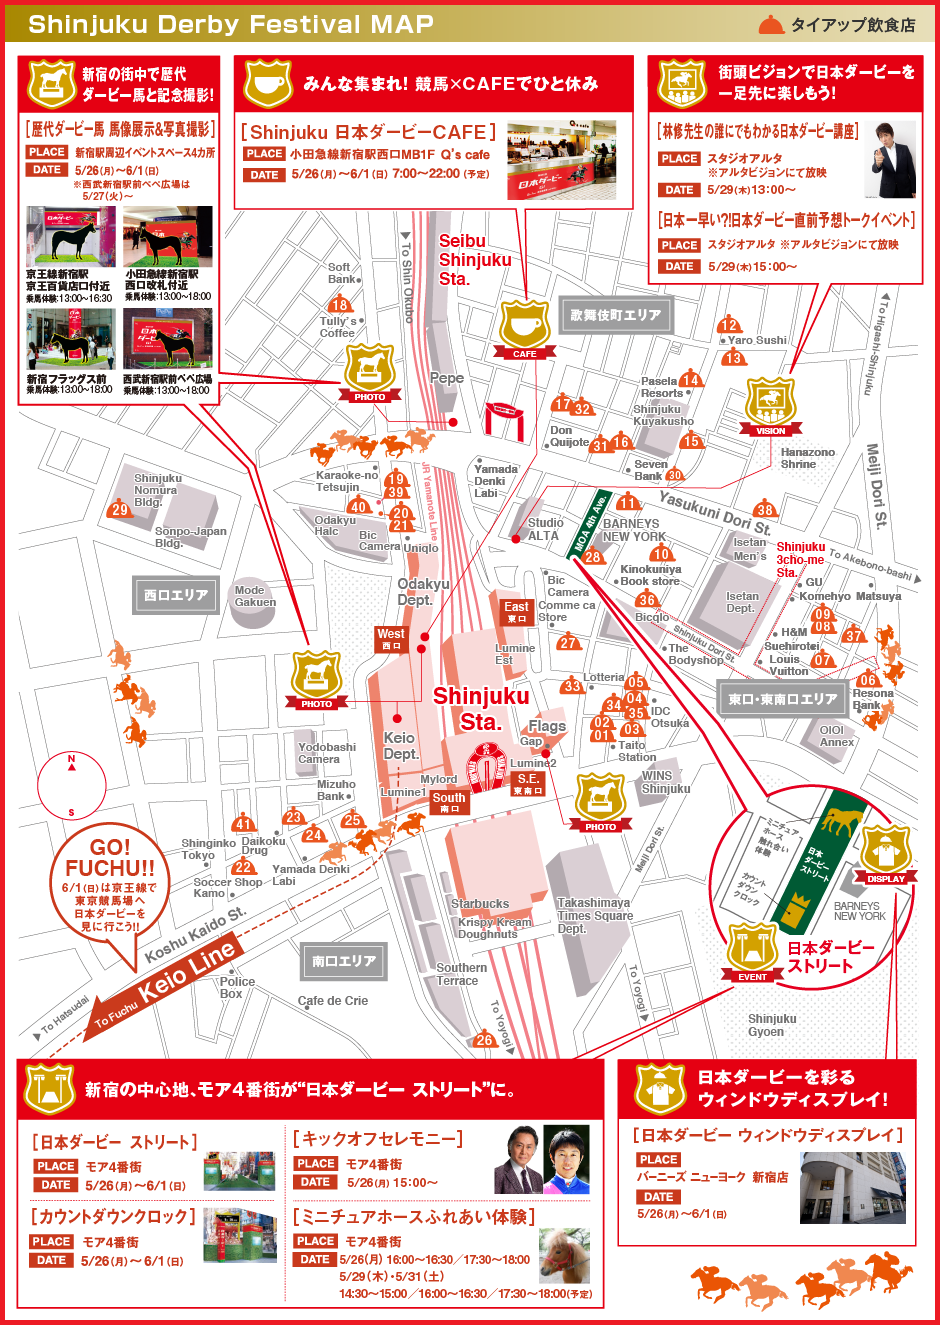 Shinjuku Derby Festival MAP